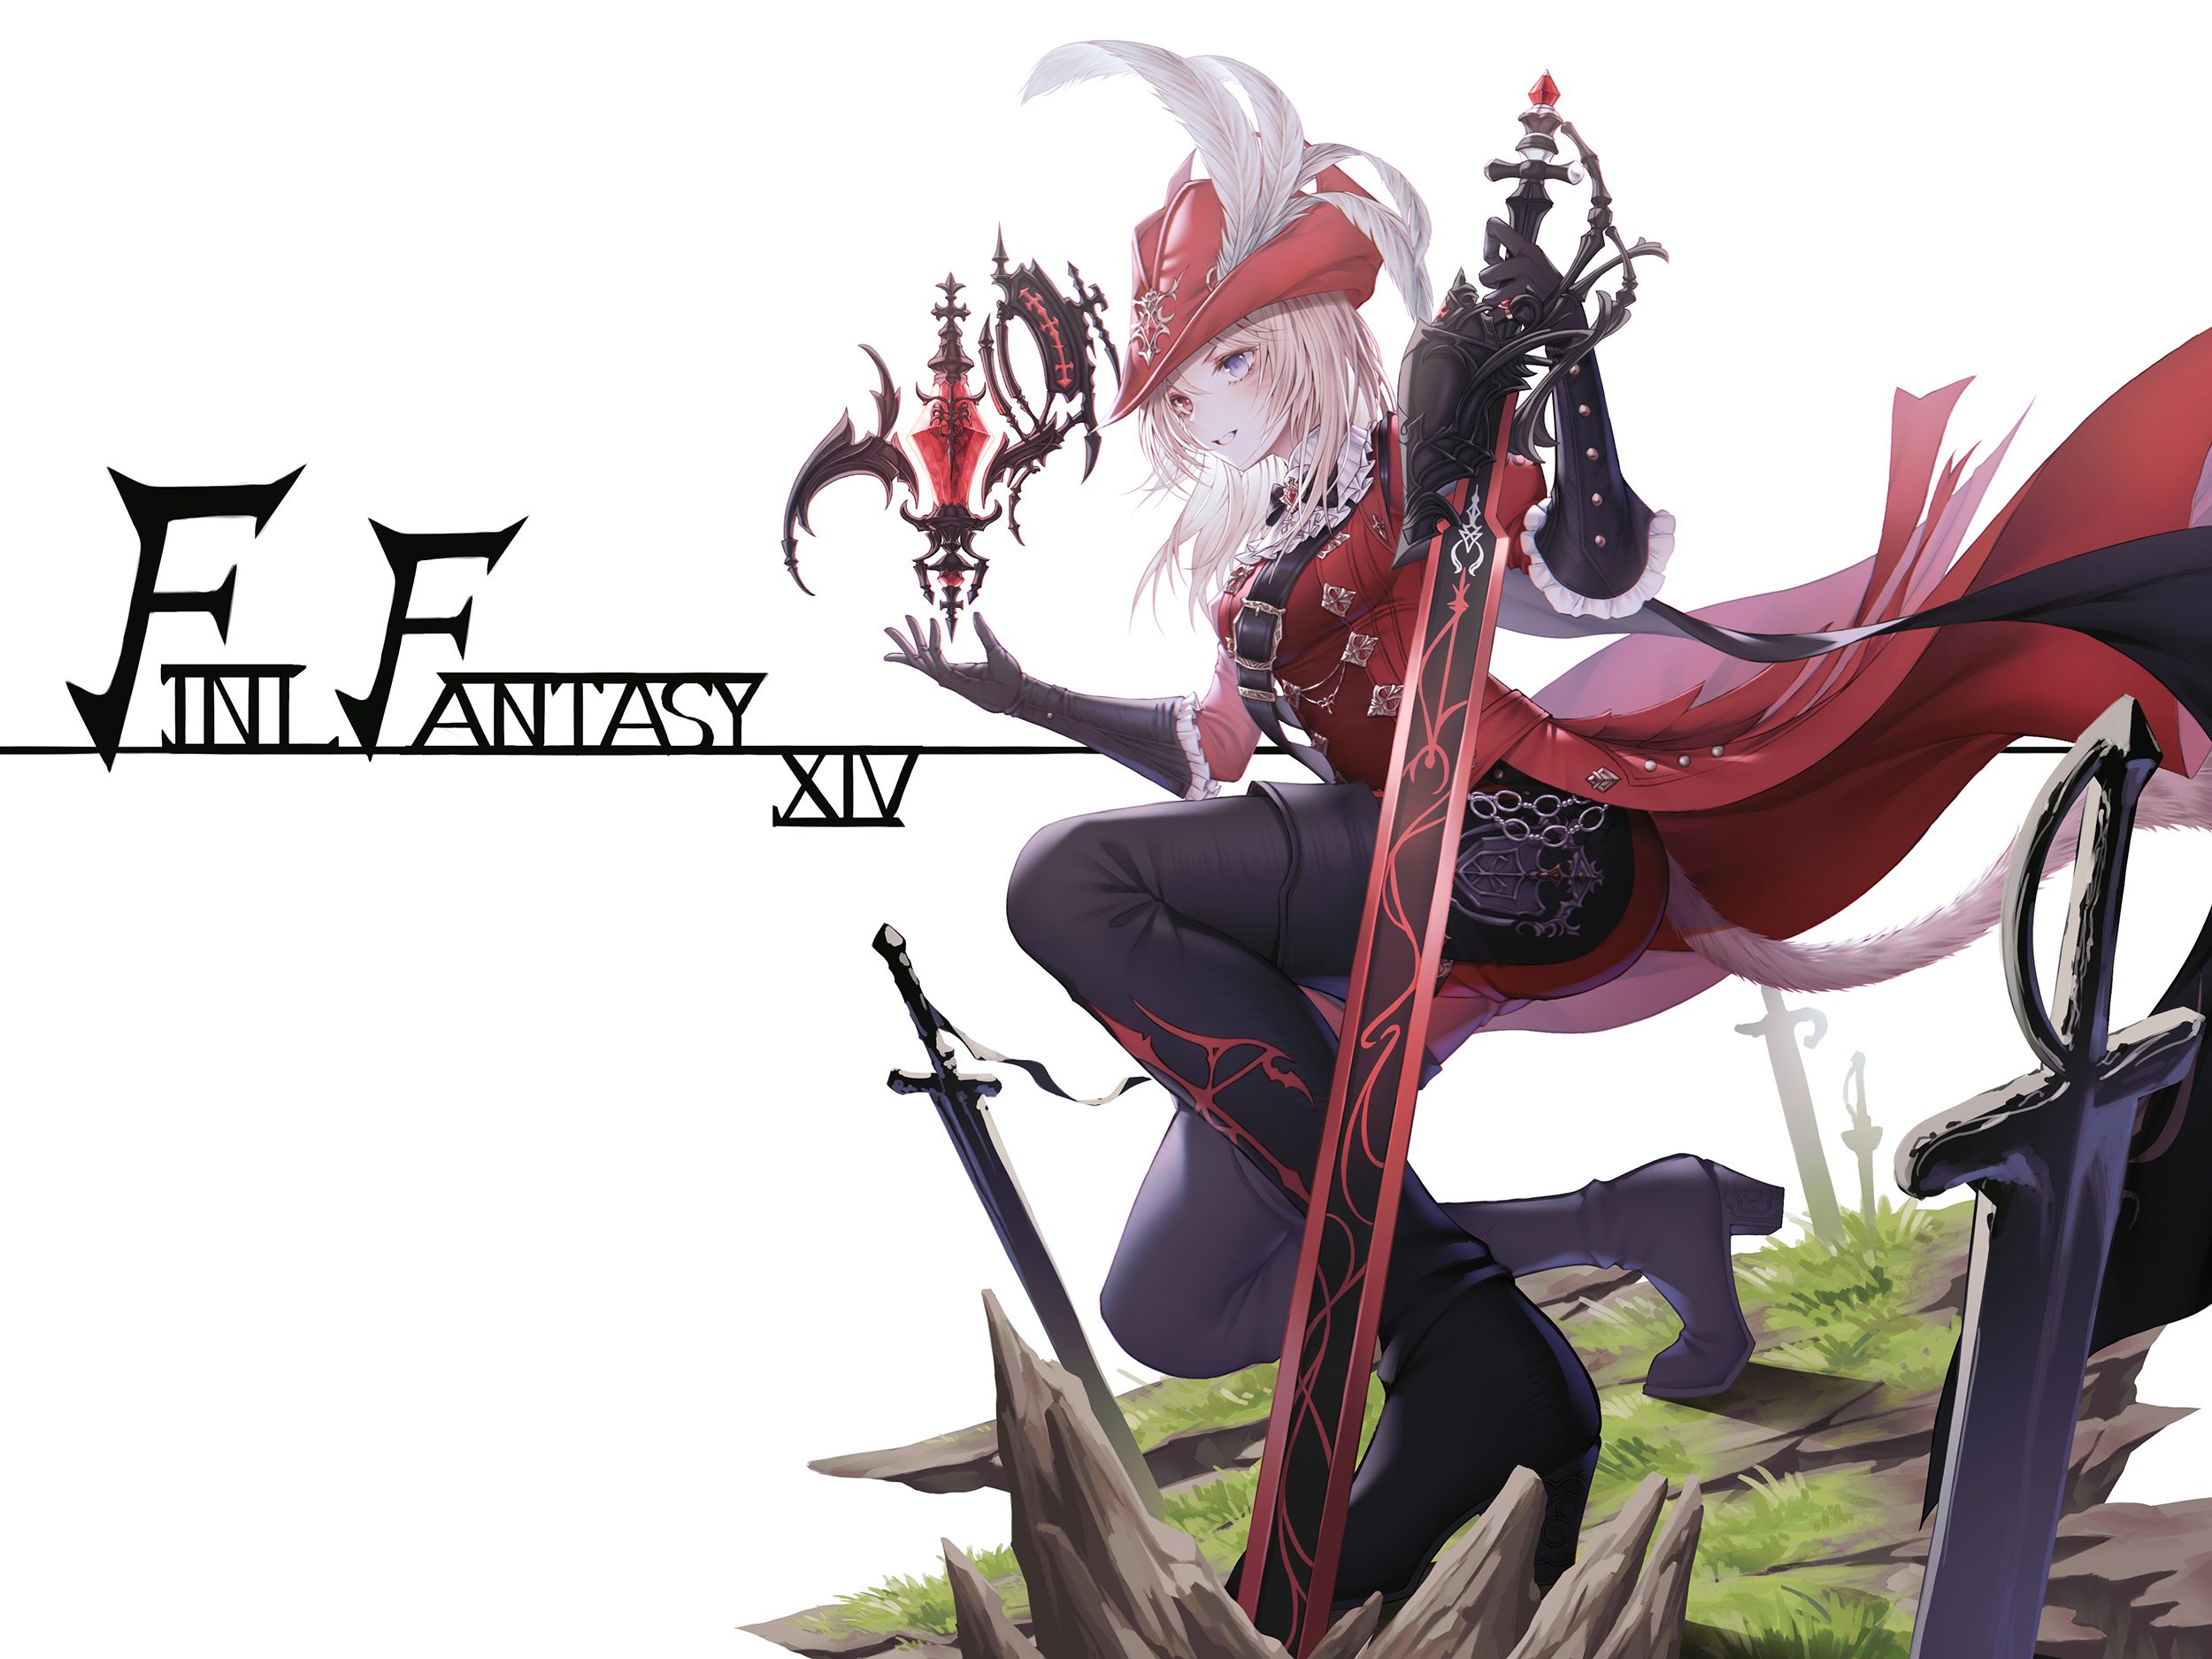 Descarga gratuita de fondo de pantalla para móvil de Heterocromía, Videojuego, Fainaru Fantajî, Final Fantasy Xiv.